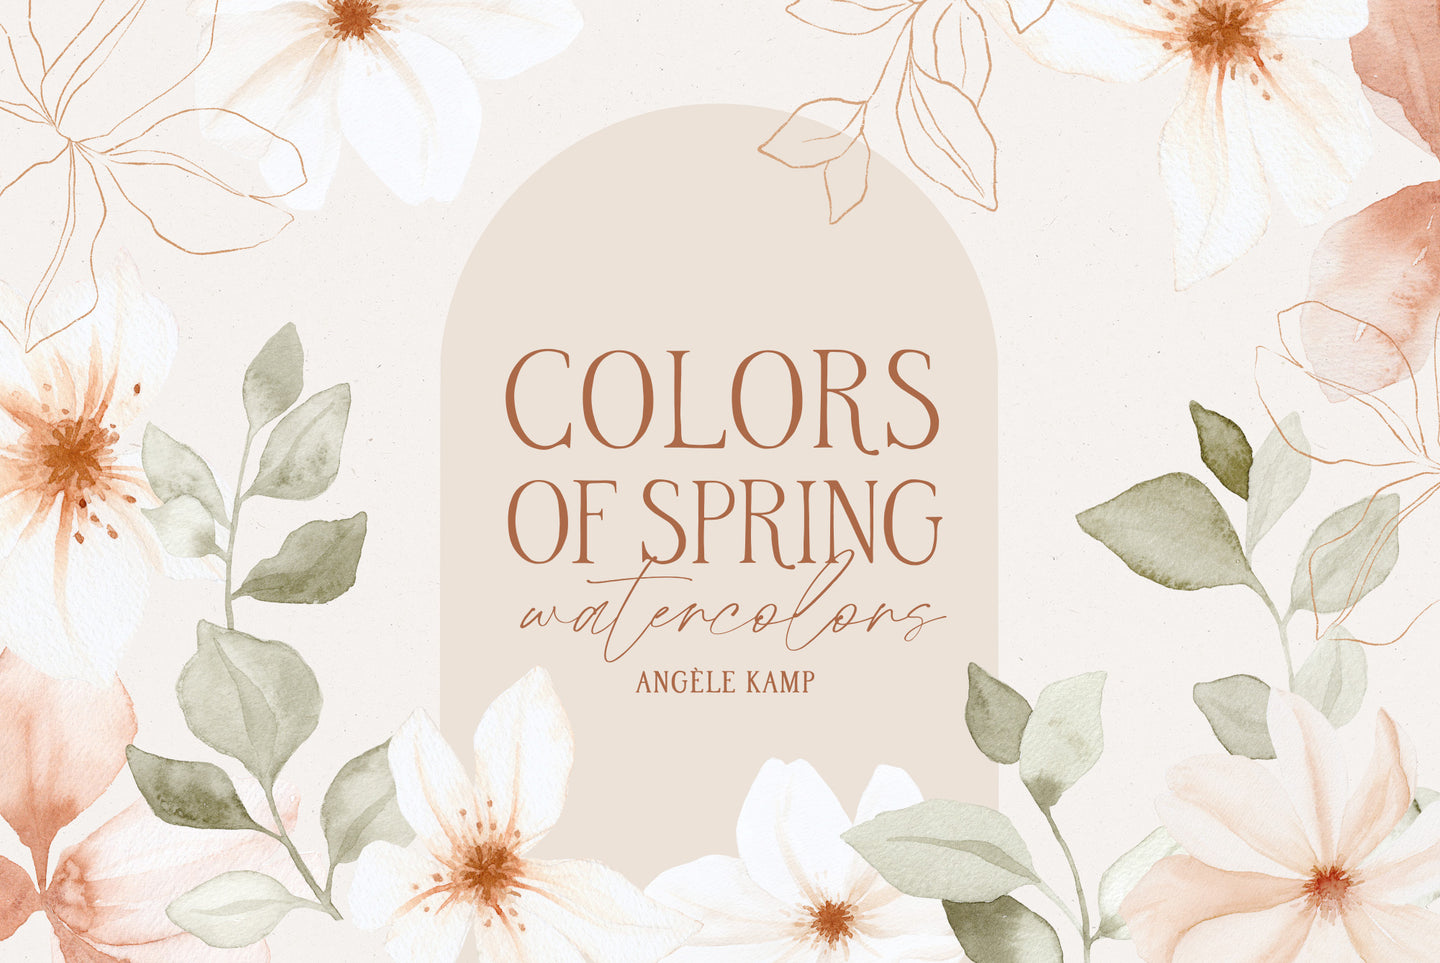 Colors of Spring watercolors